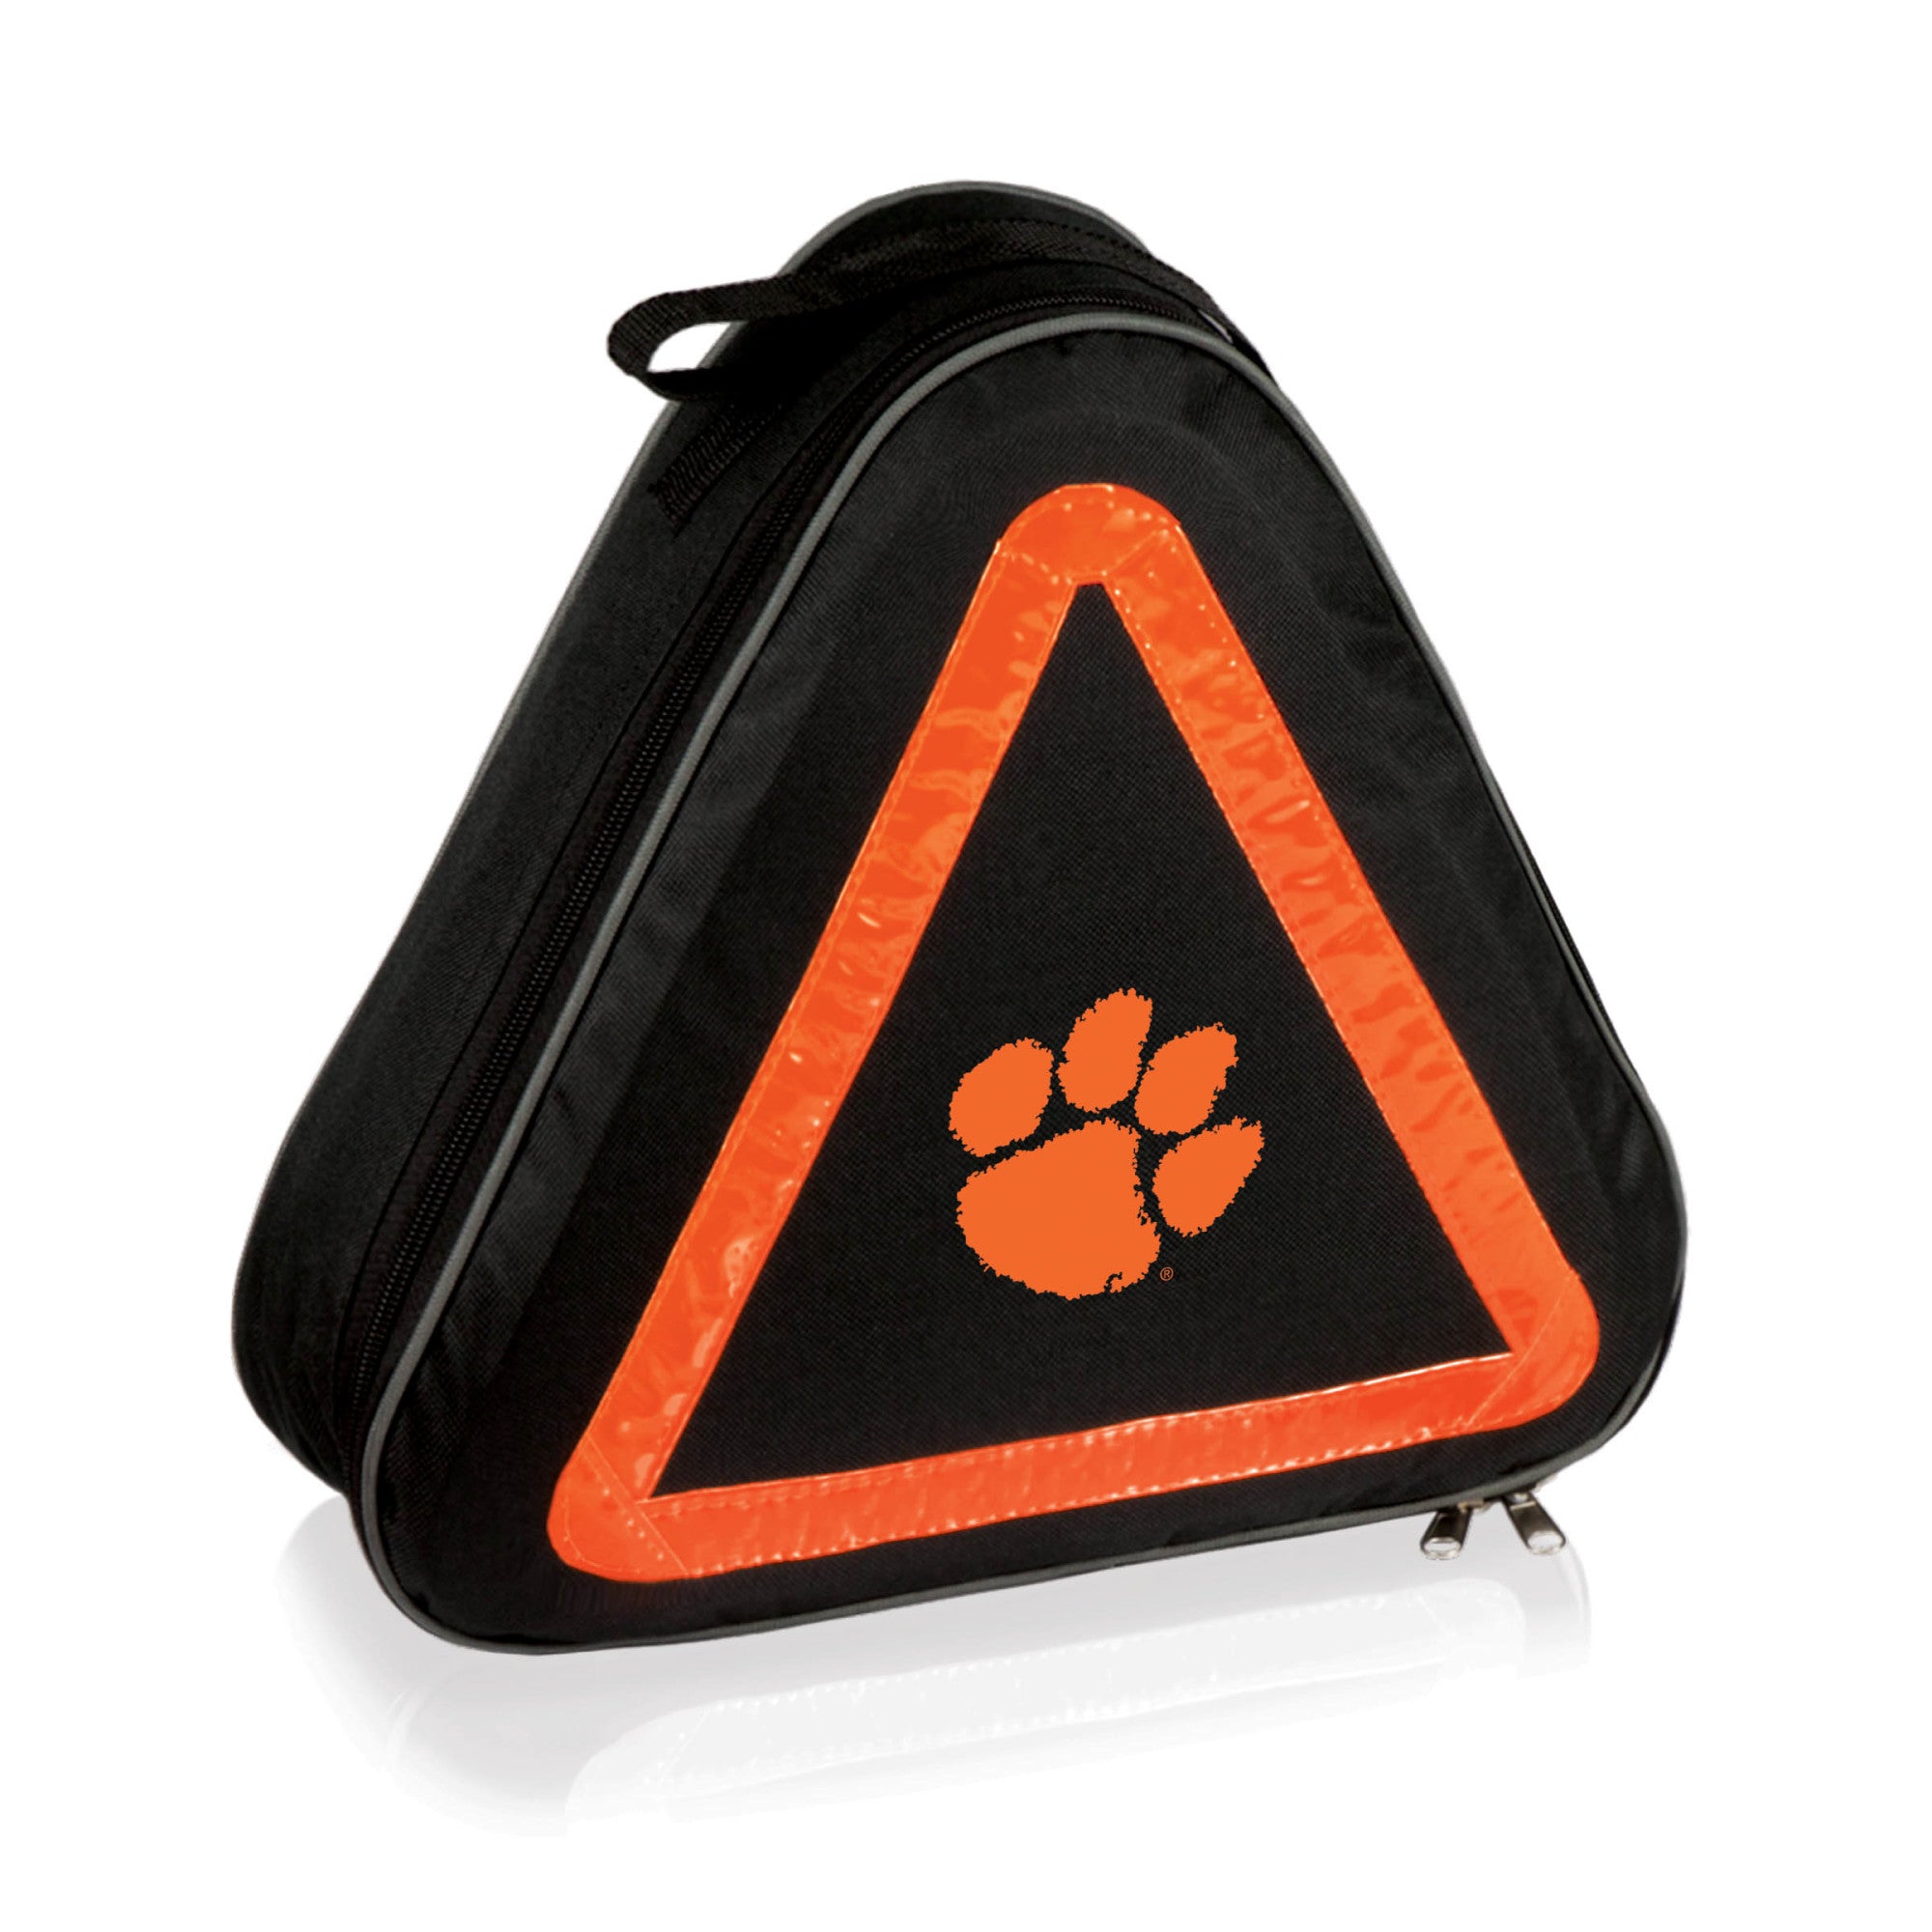 Clemson Tigers - Roadside Emergency Car Kit, (Black with Orange Accents)